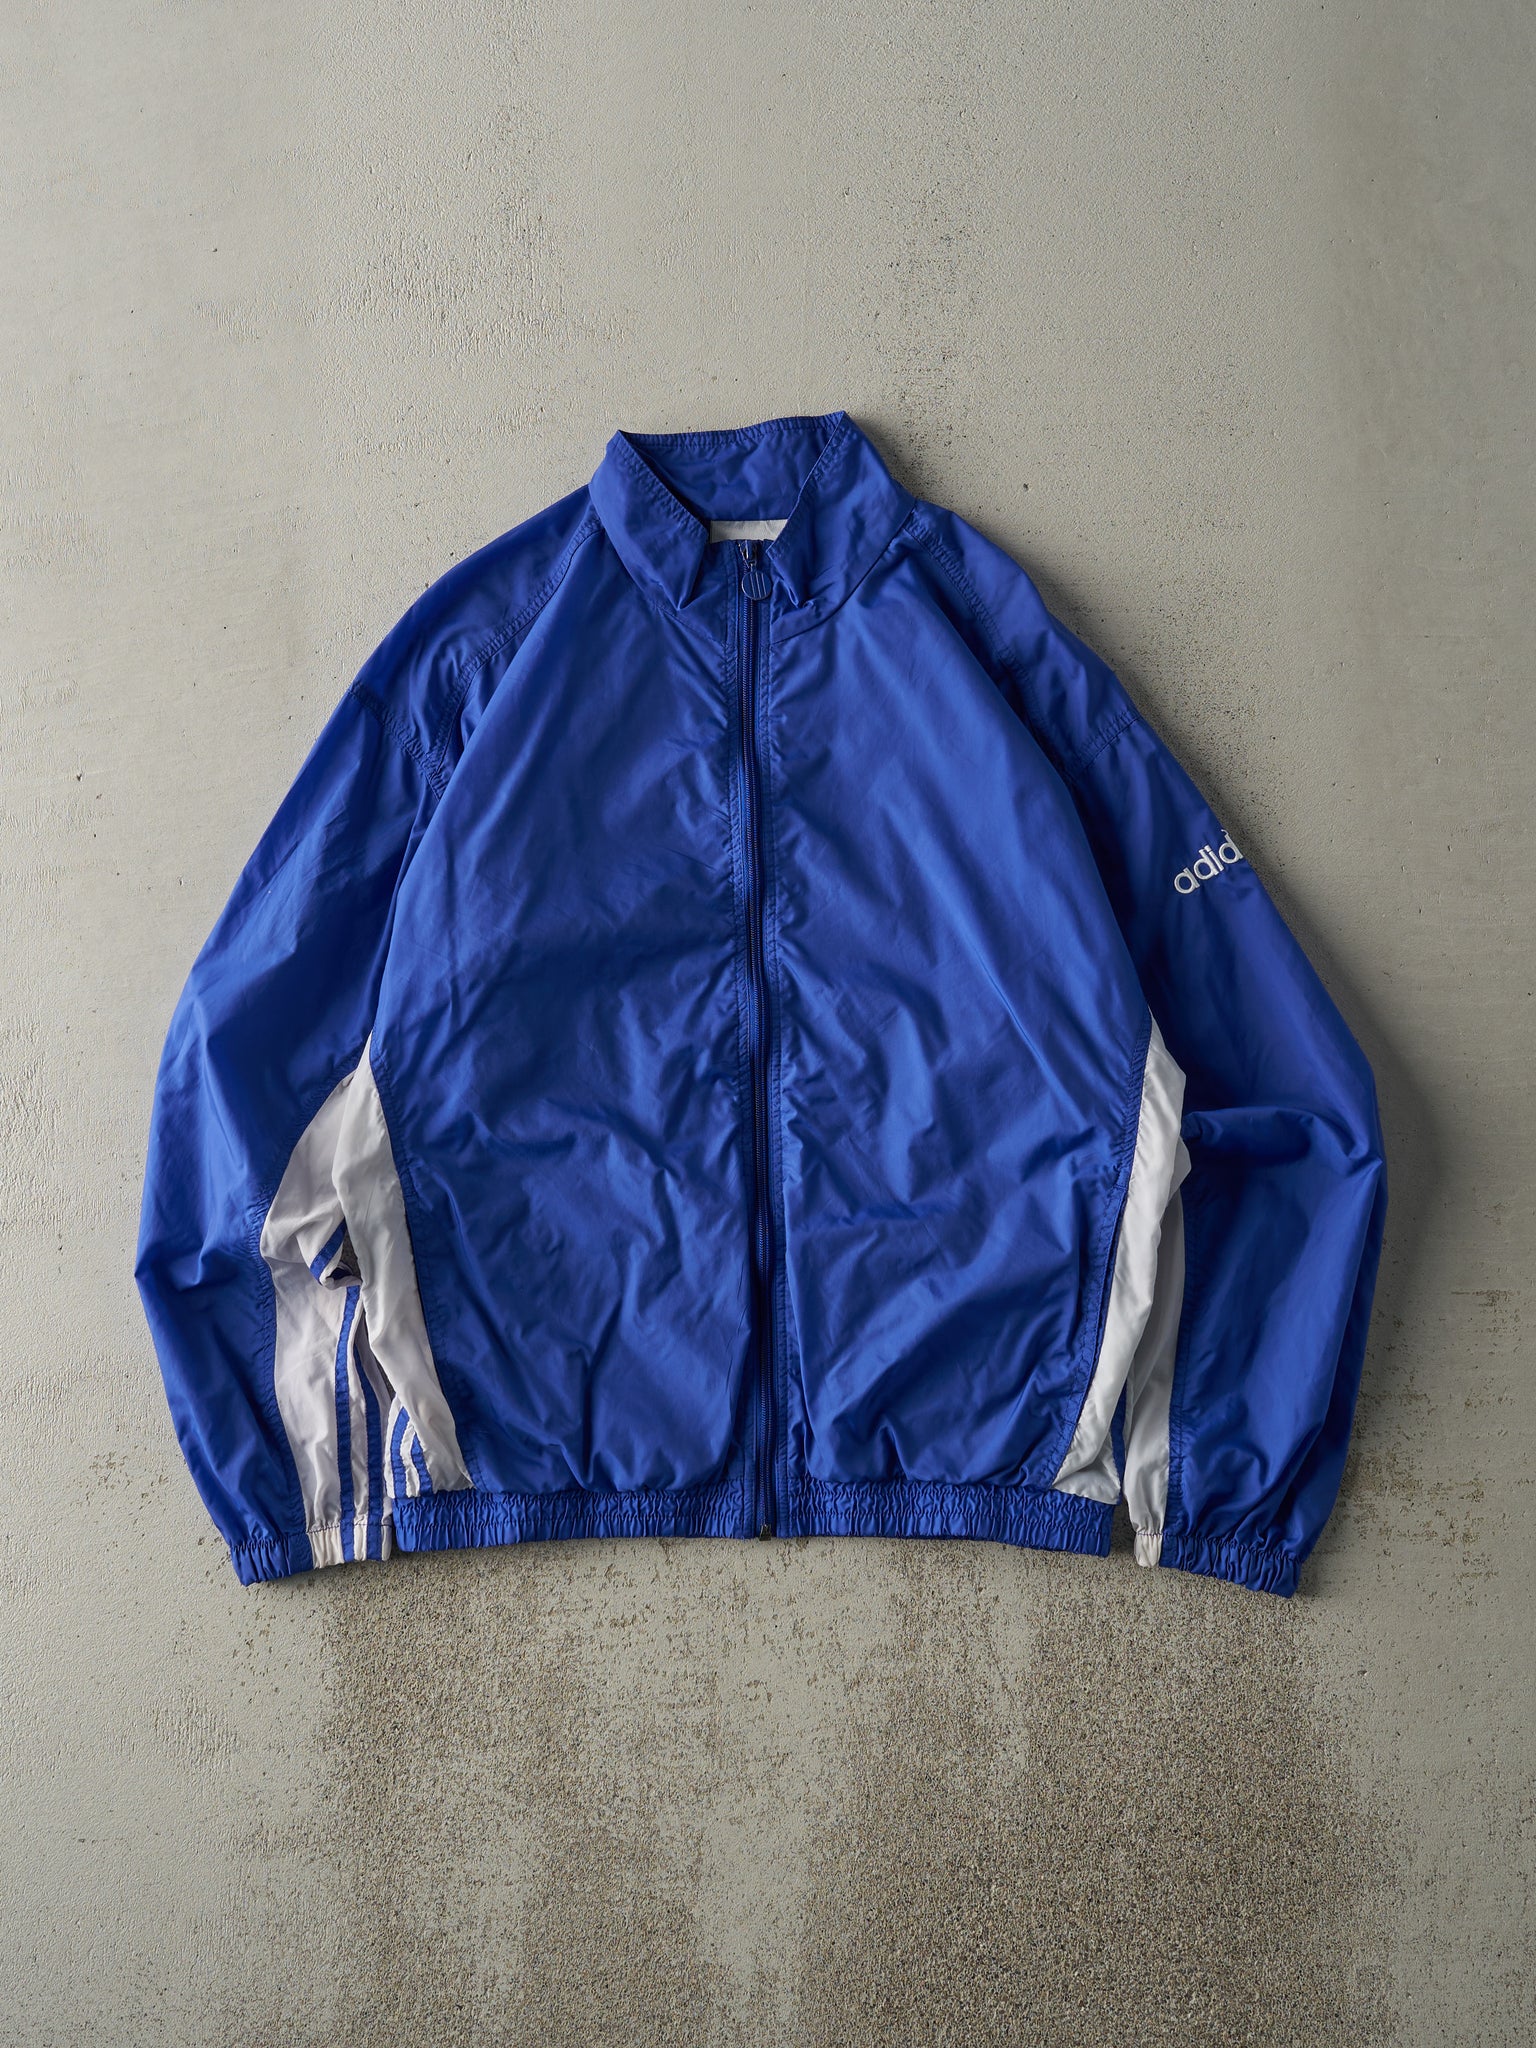 Vintage 90s Blue & White Adidas Windbreaker Jacket (M/L)